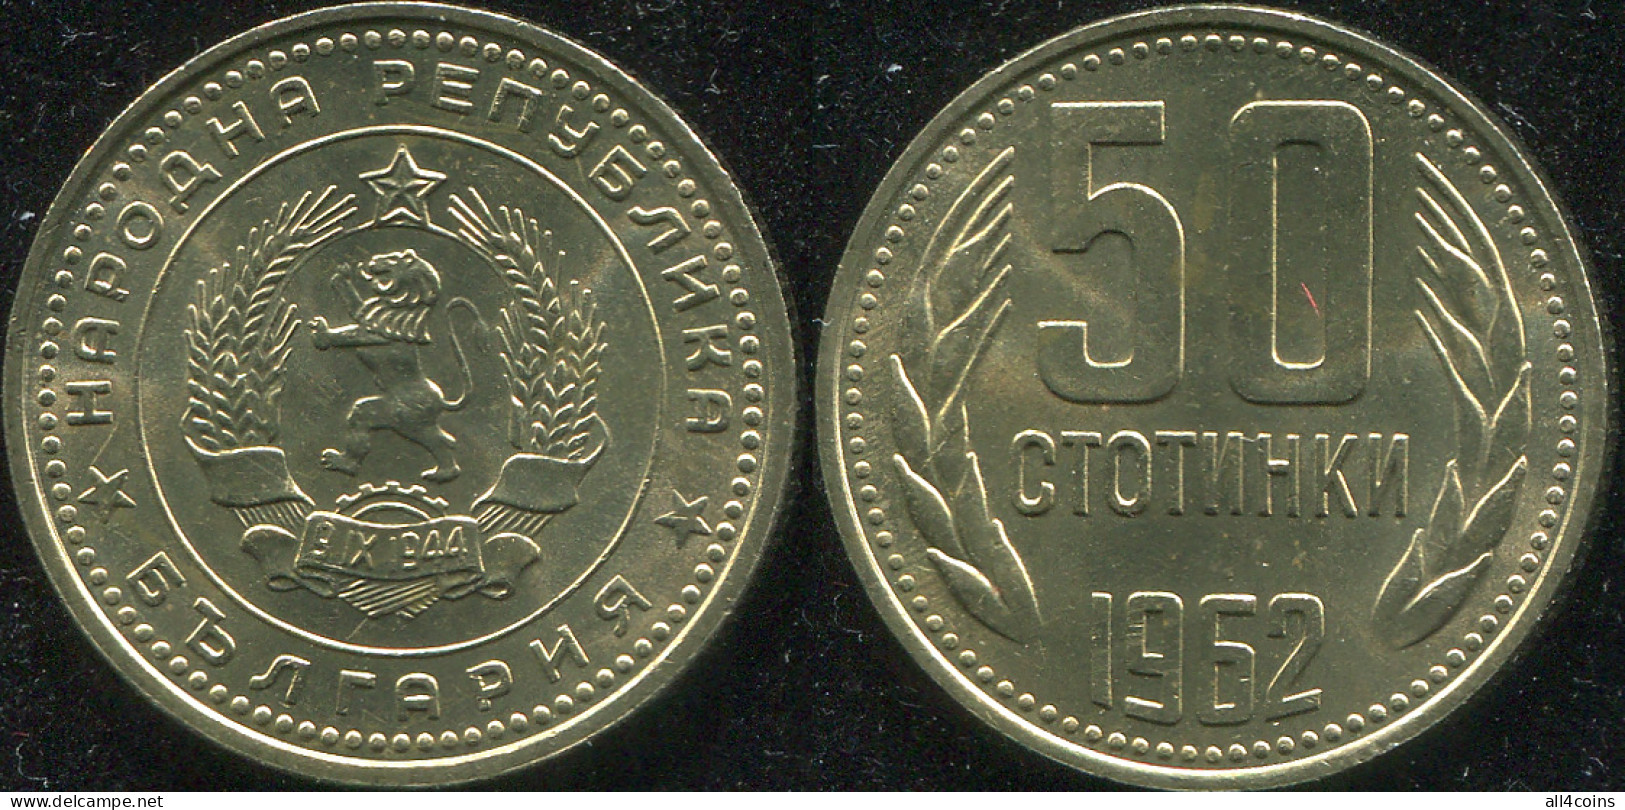 Bulgaria. 50 Stotinki. 1962 (Coin KM#64. Unc) - Bulgarie